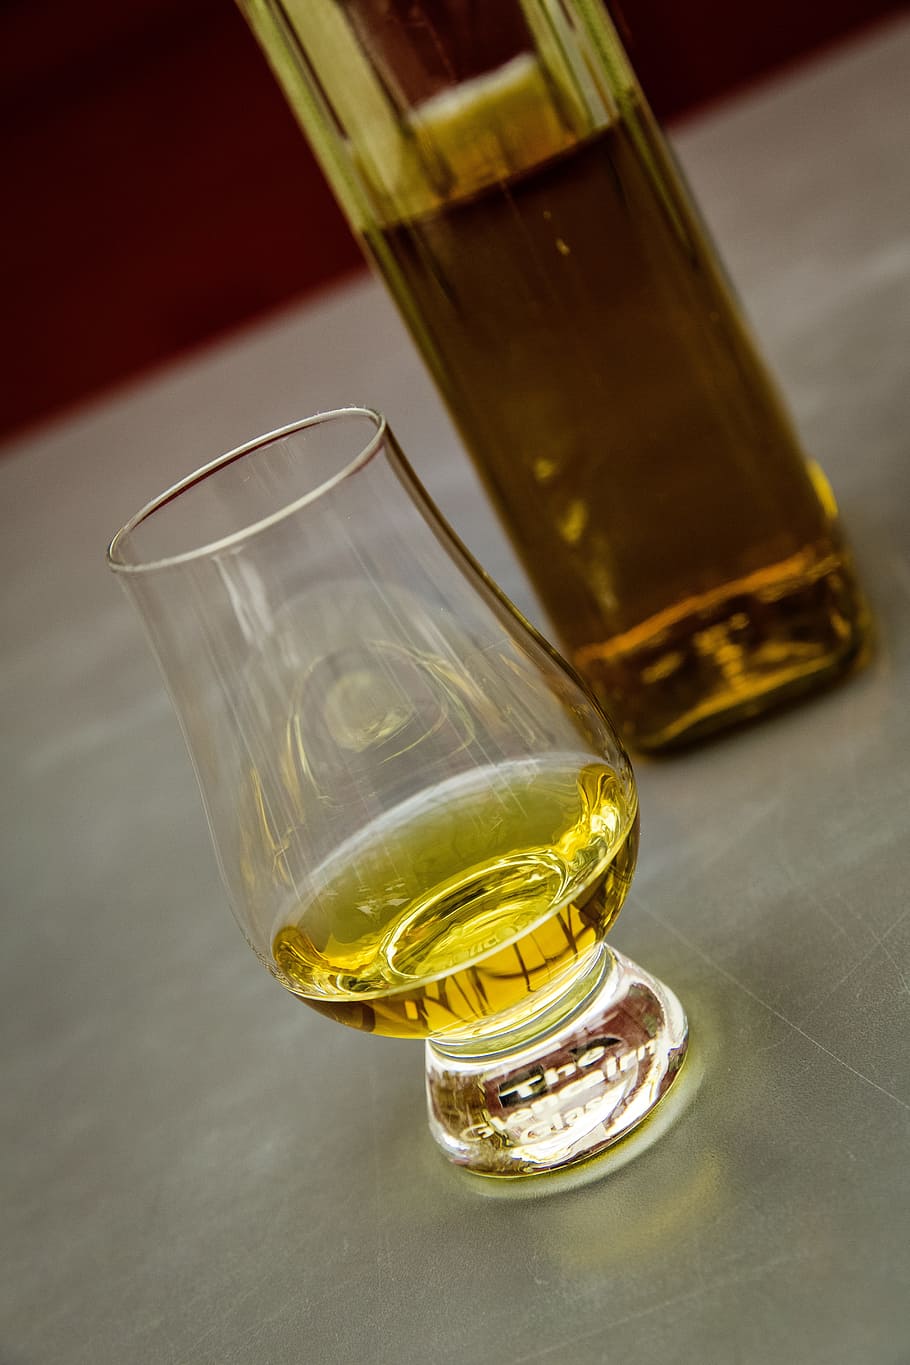 Whiskey, Whisky, Alcohol, Glass, Bar, brandy, drink, bottle, whiskey glass, bourbon